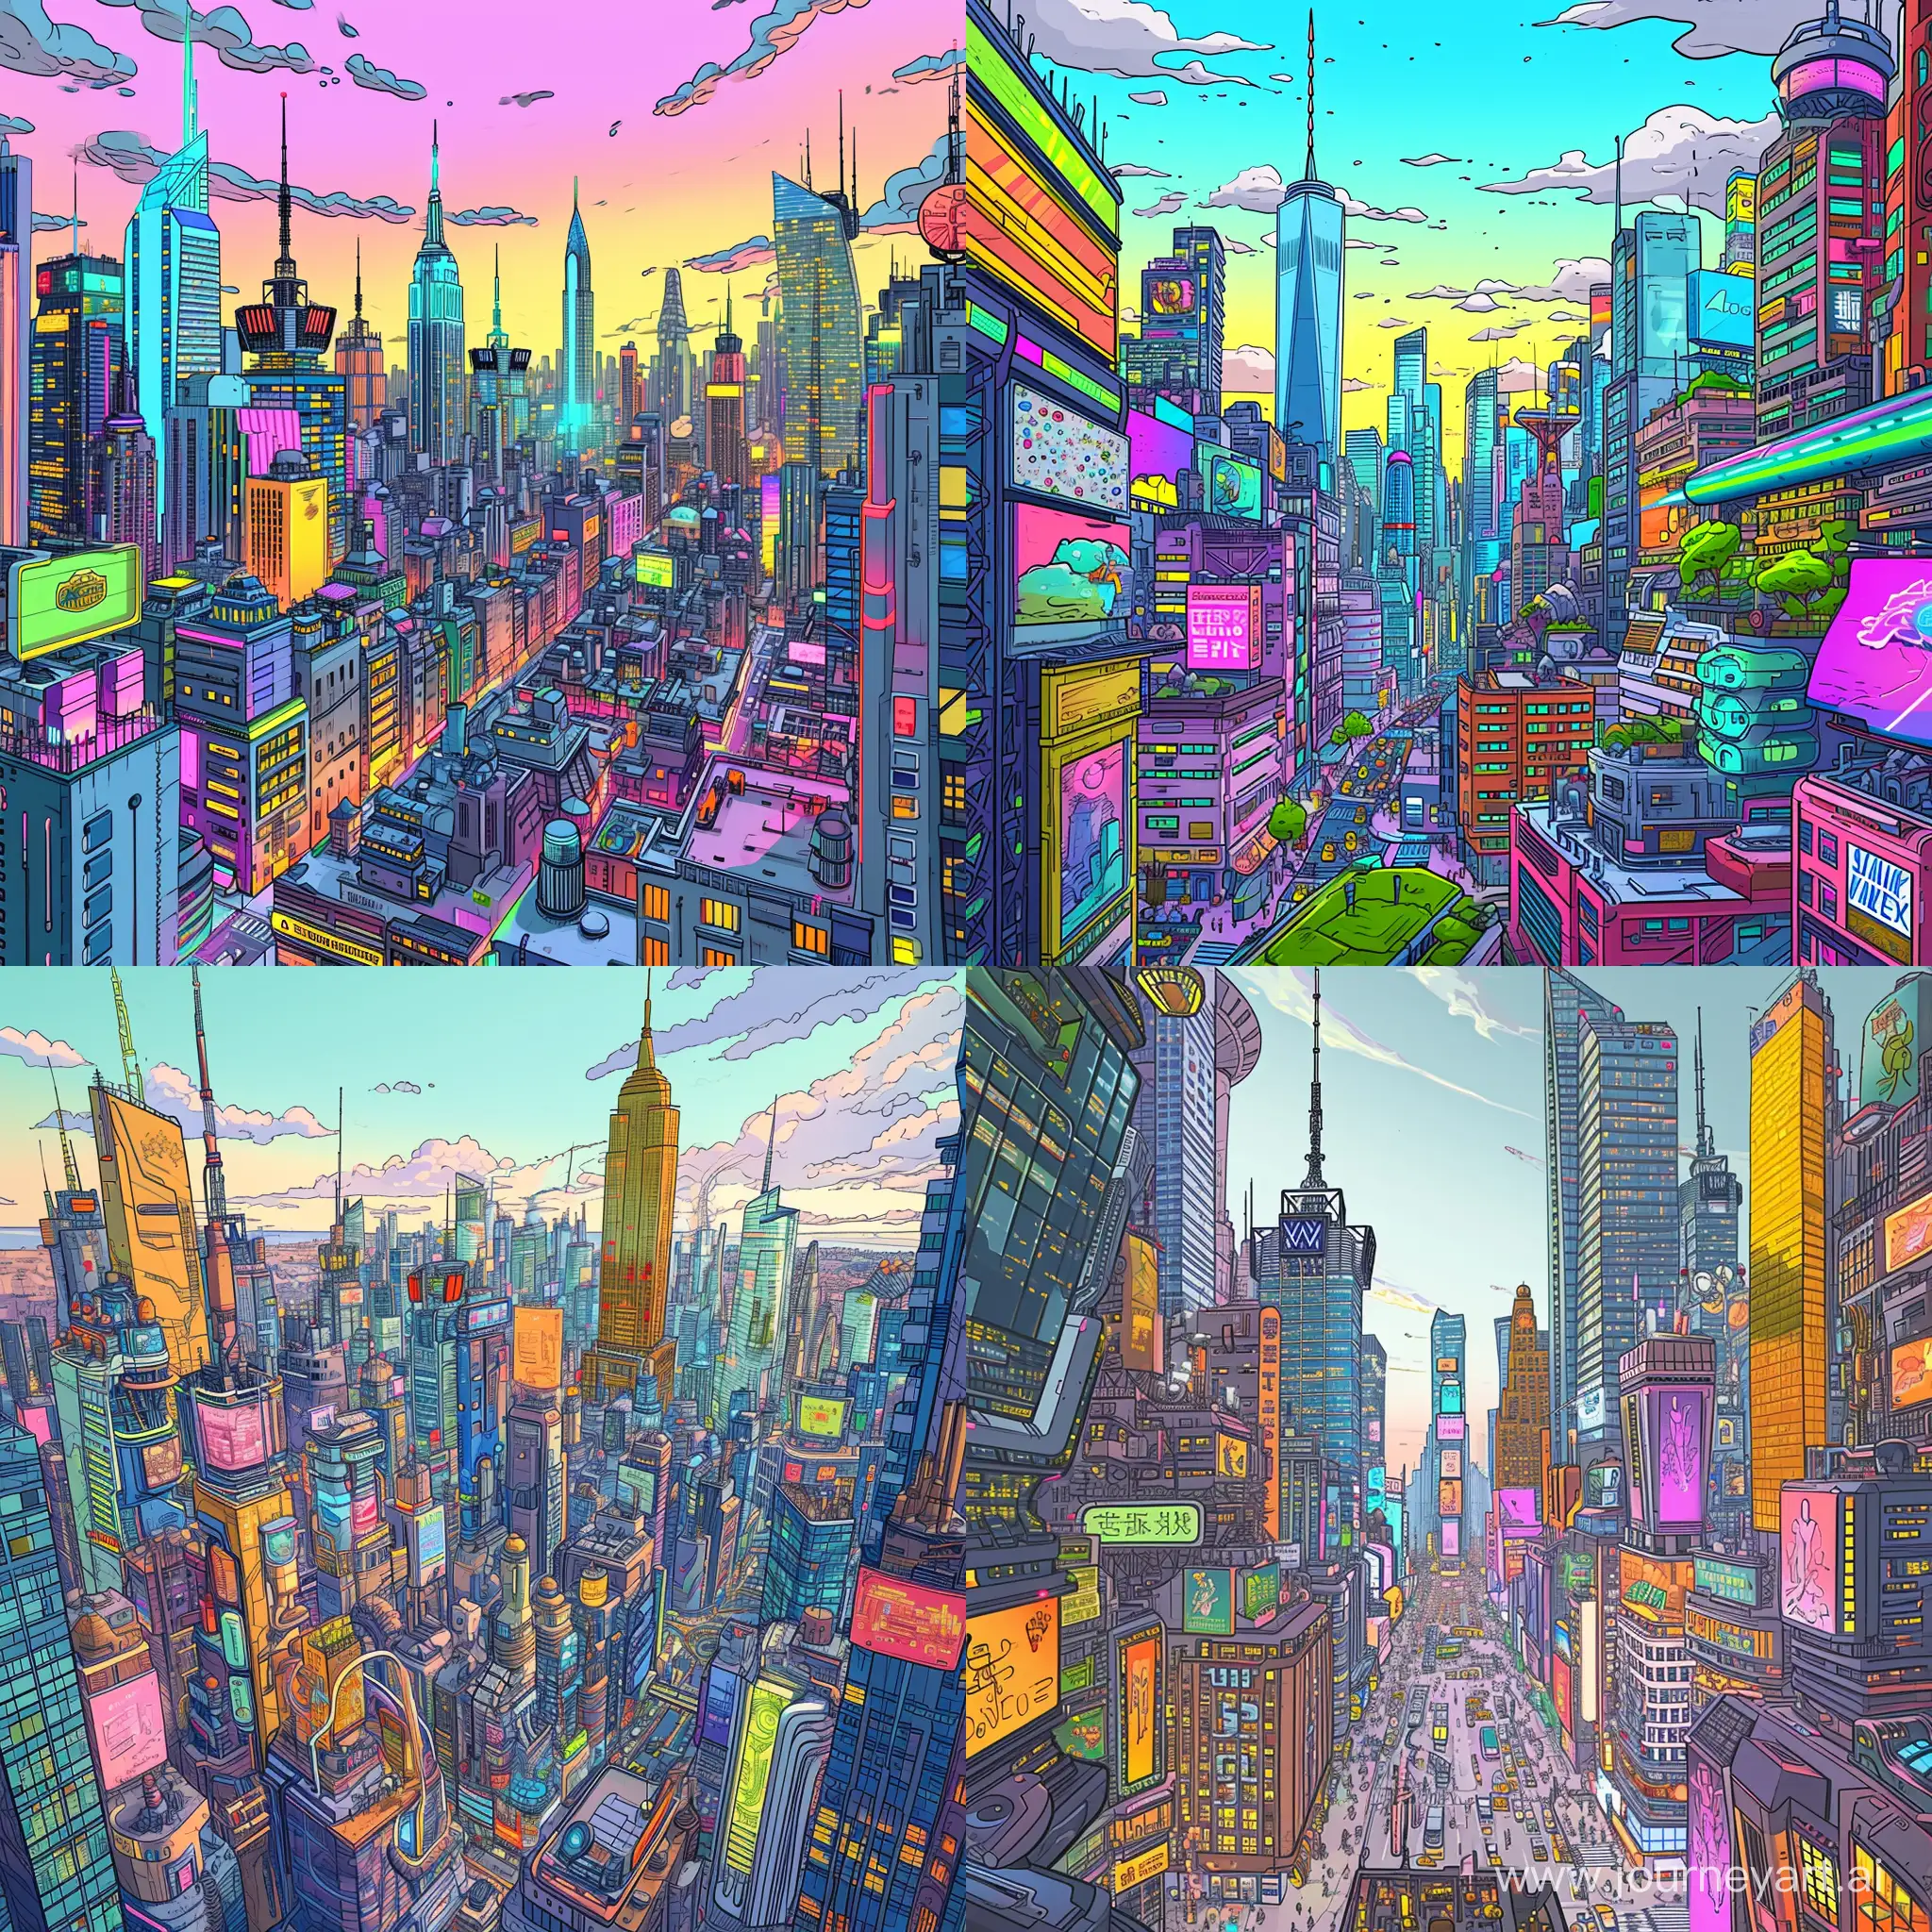 Vibrant-Cyberpunk-New-York-Cityscape-in-2020s-Cartoon-Style